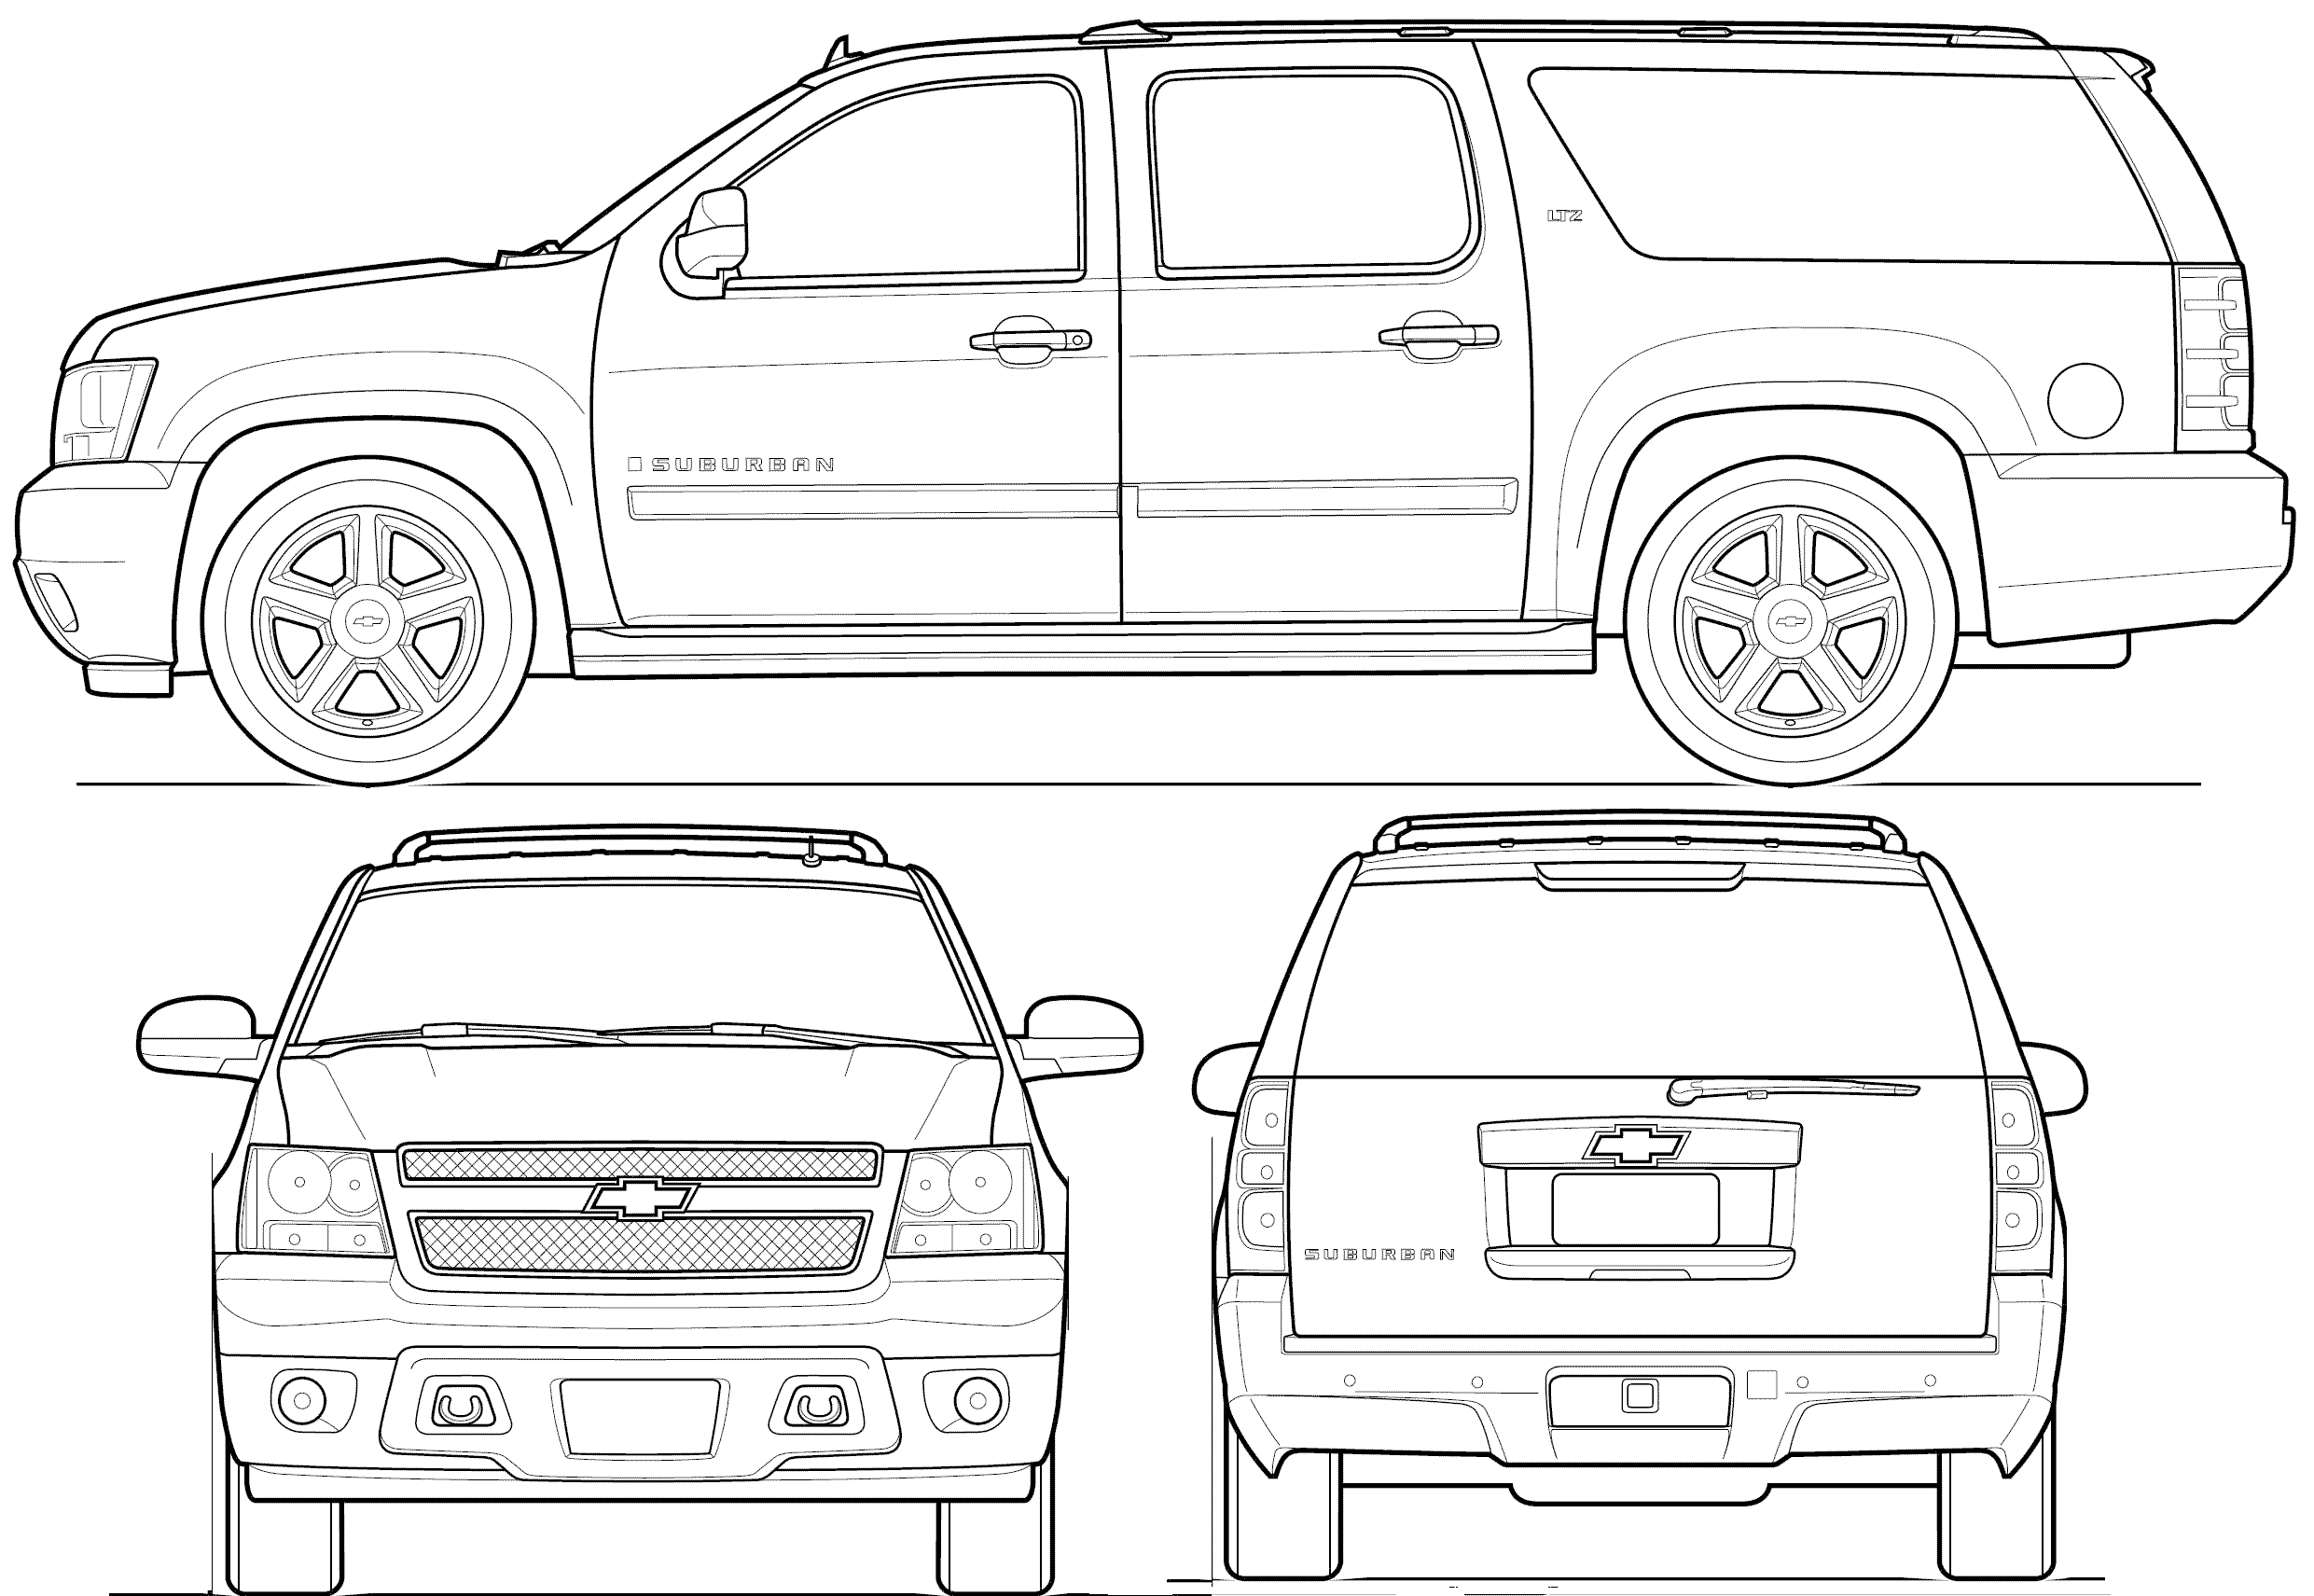 Chevrolet Suburban blueprint